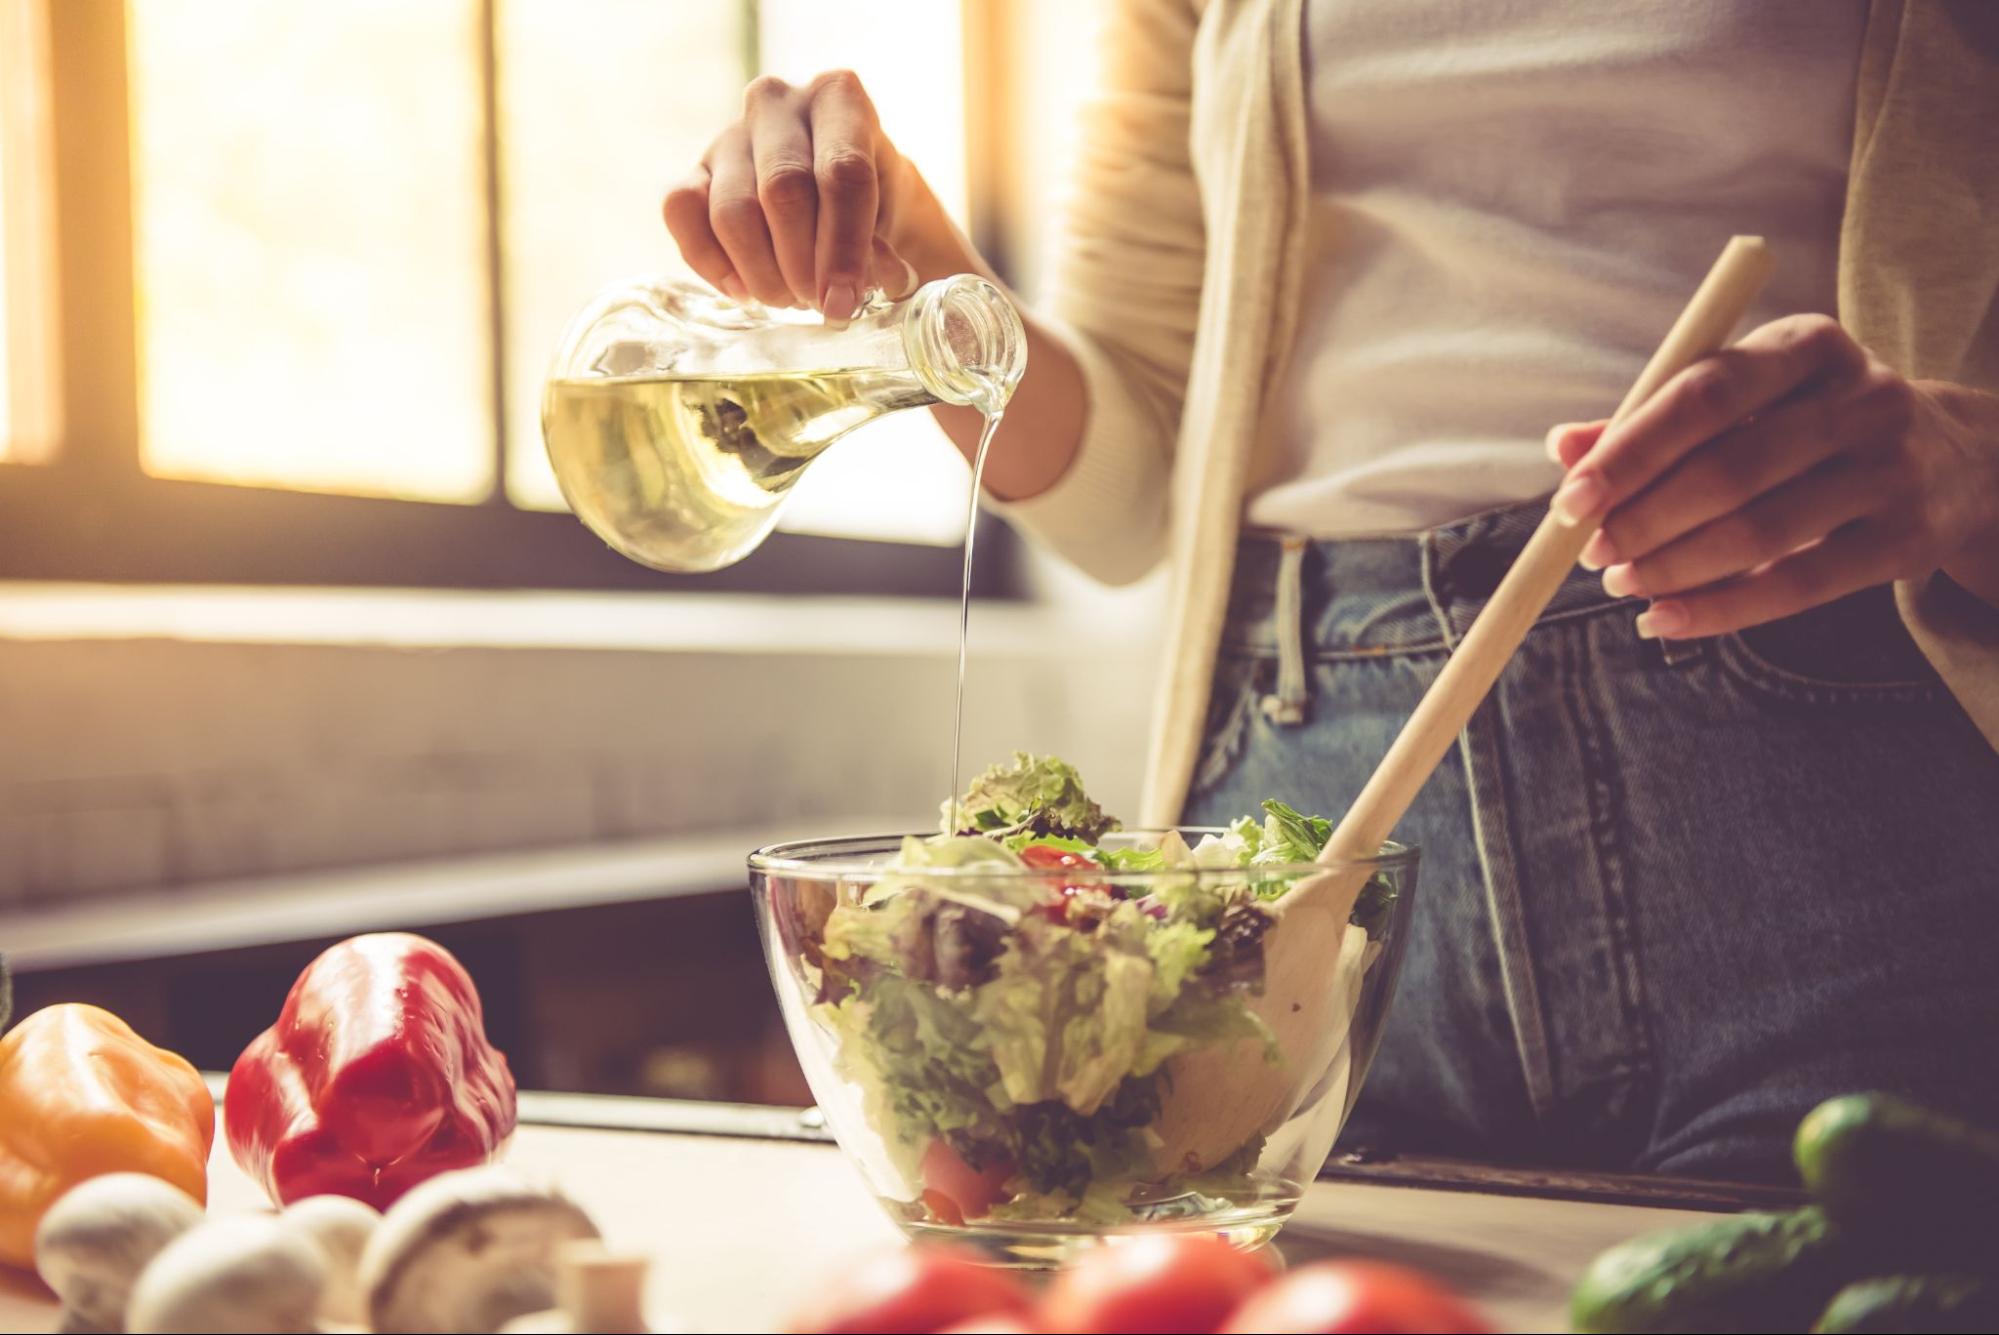 Good fat meal idea: olive oil on salad